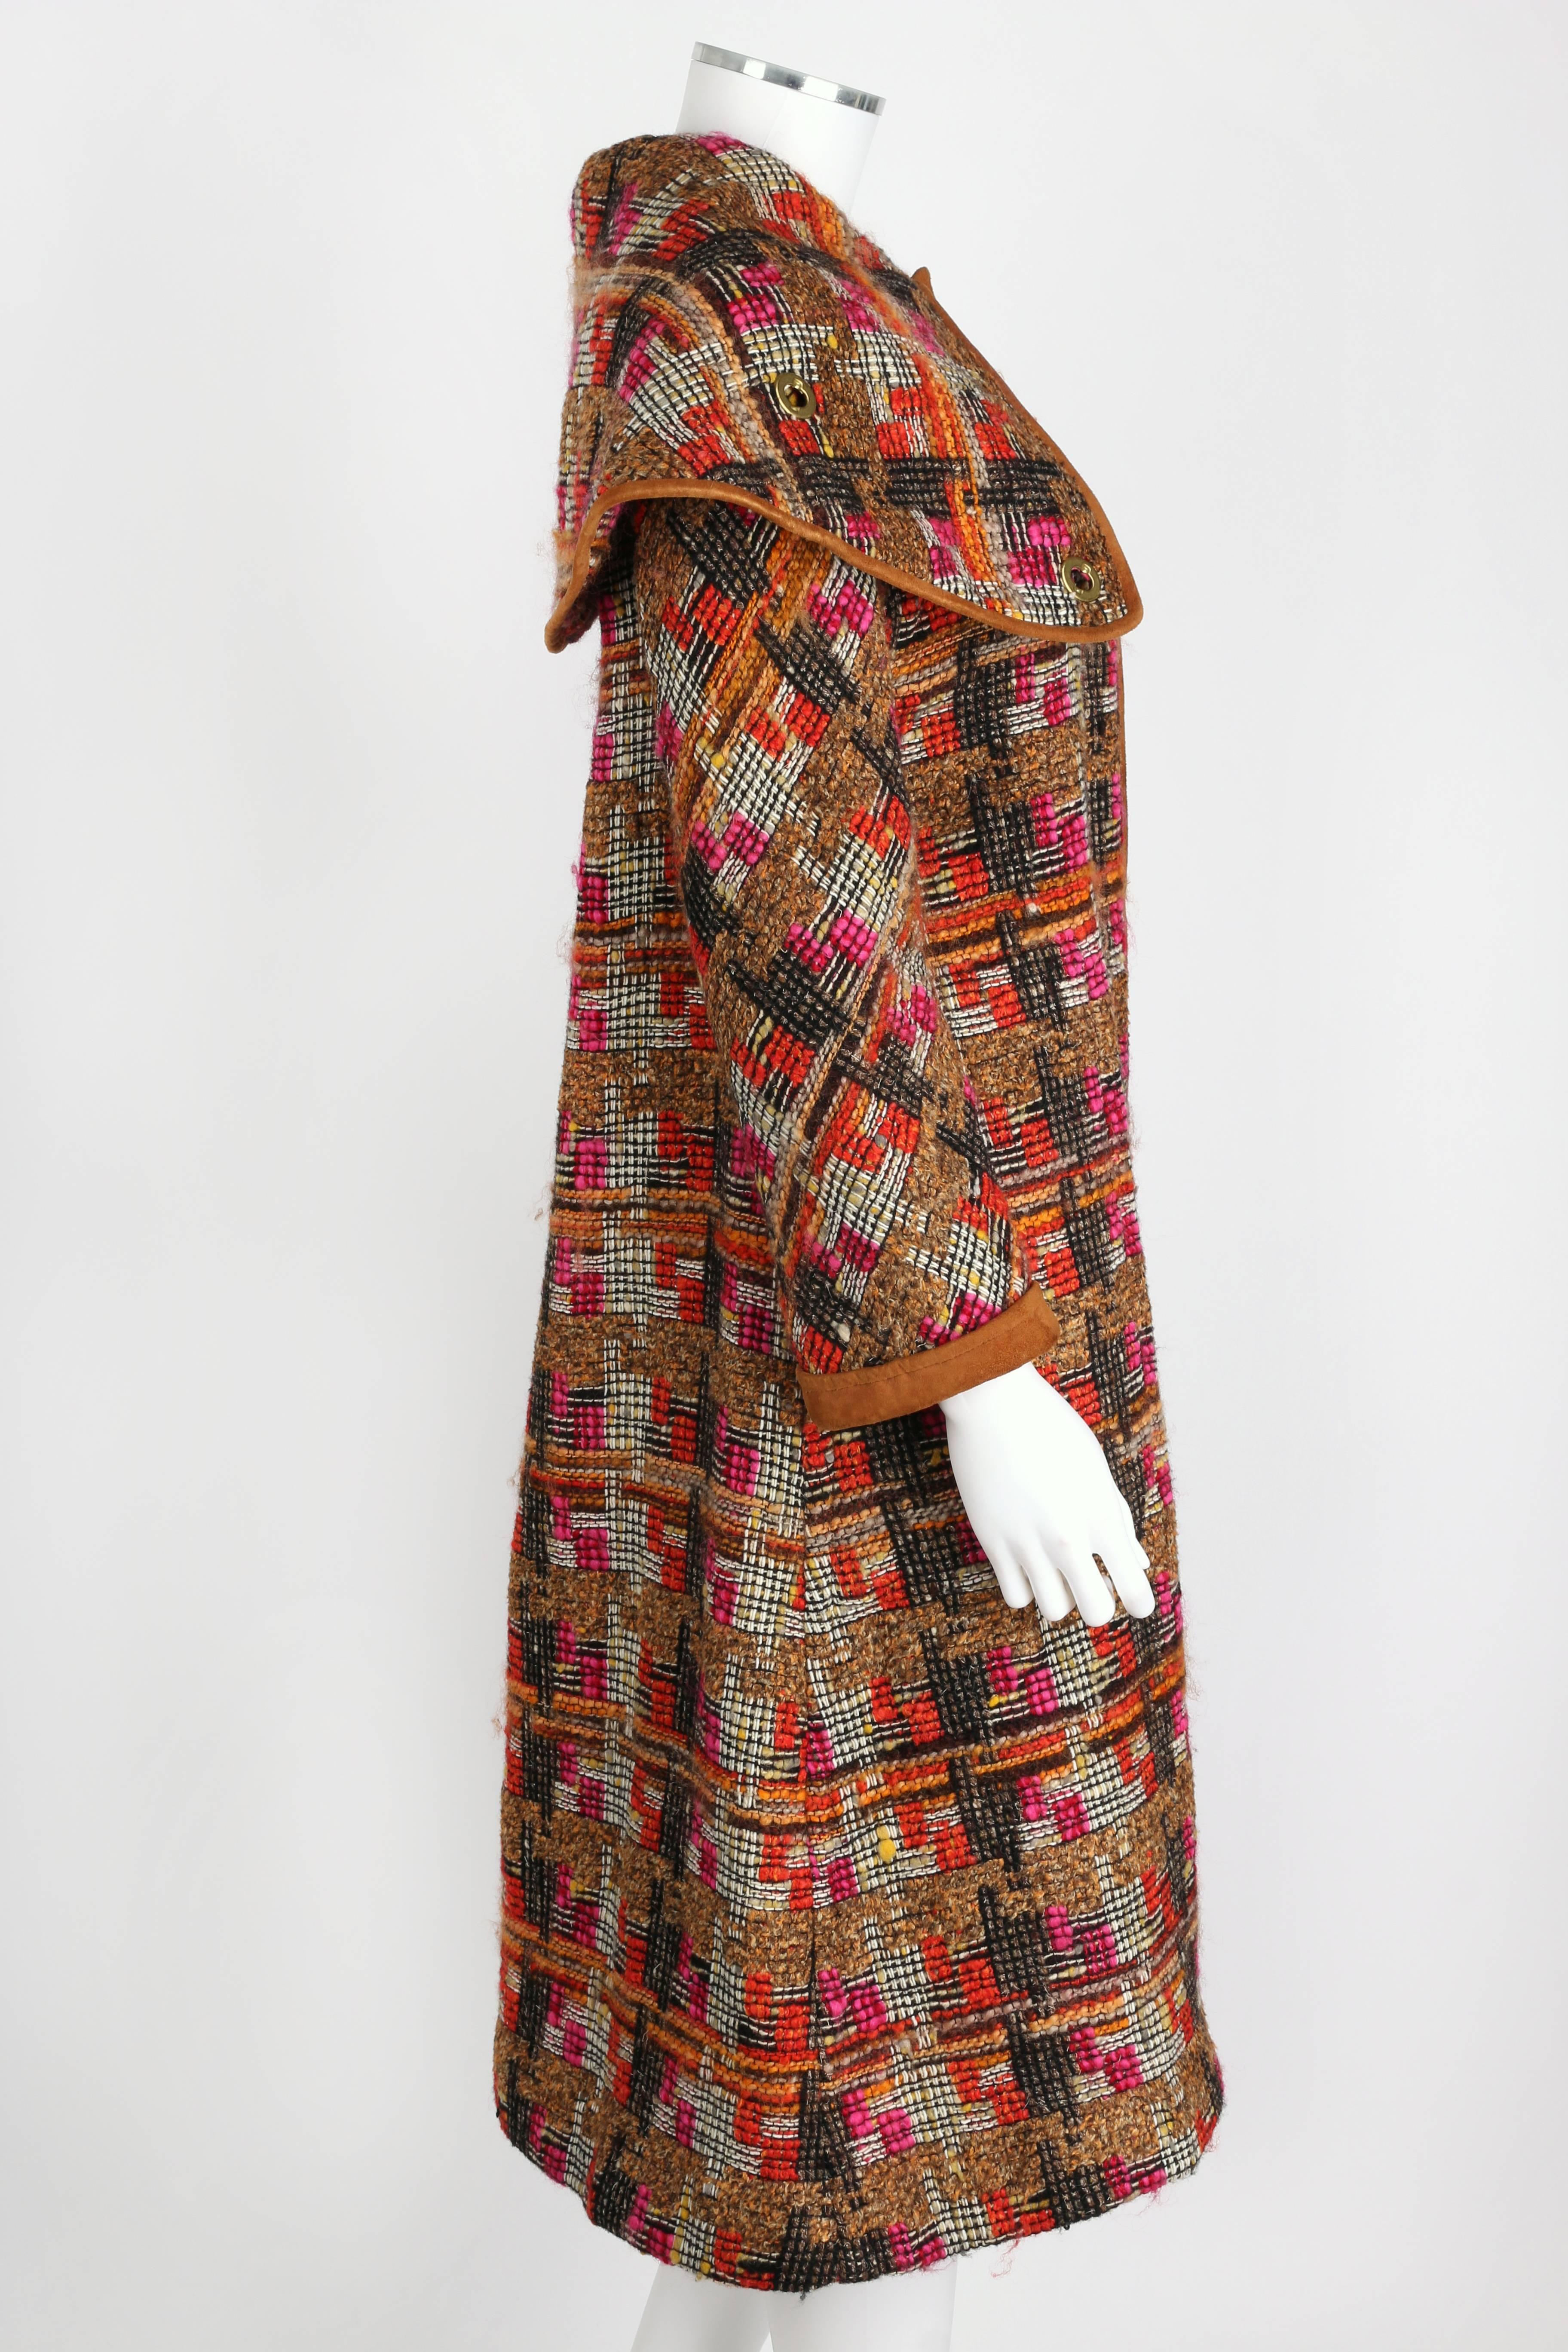 Brown BONNIE CASHIN 1960s SILLS Multi-color Tweed Suede Long Cape Coat Size XS / S